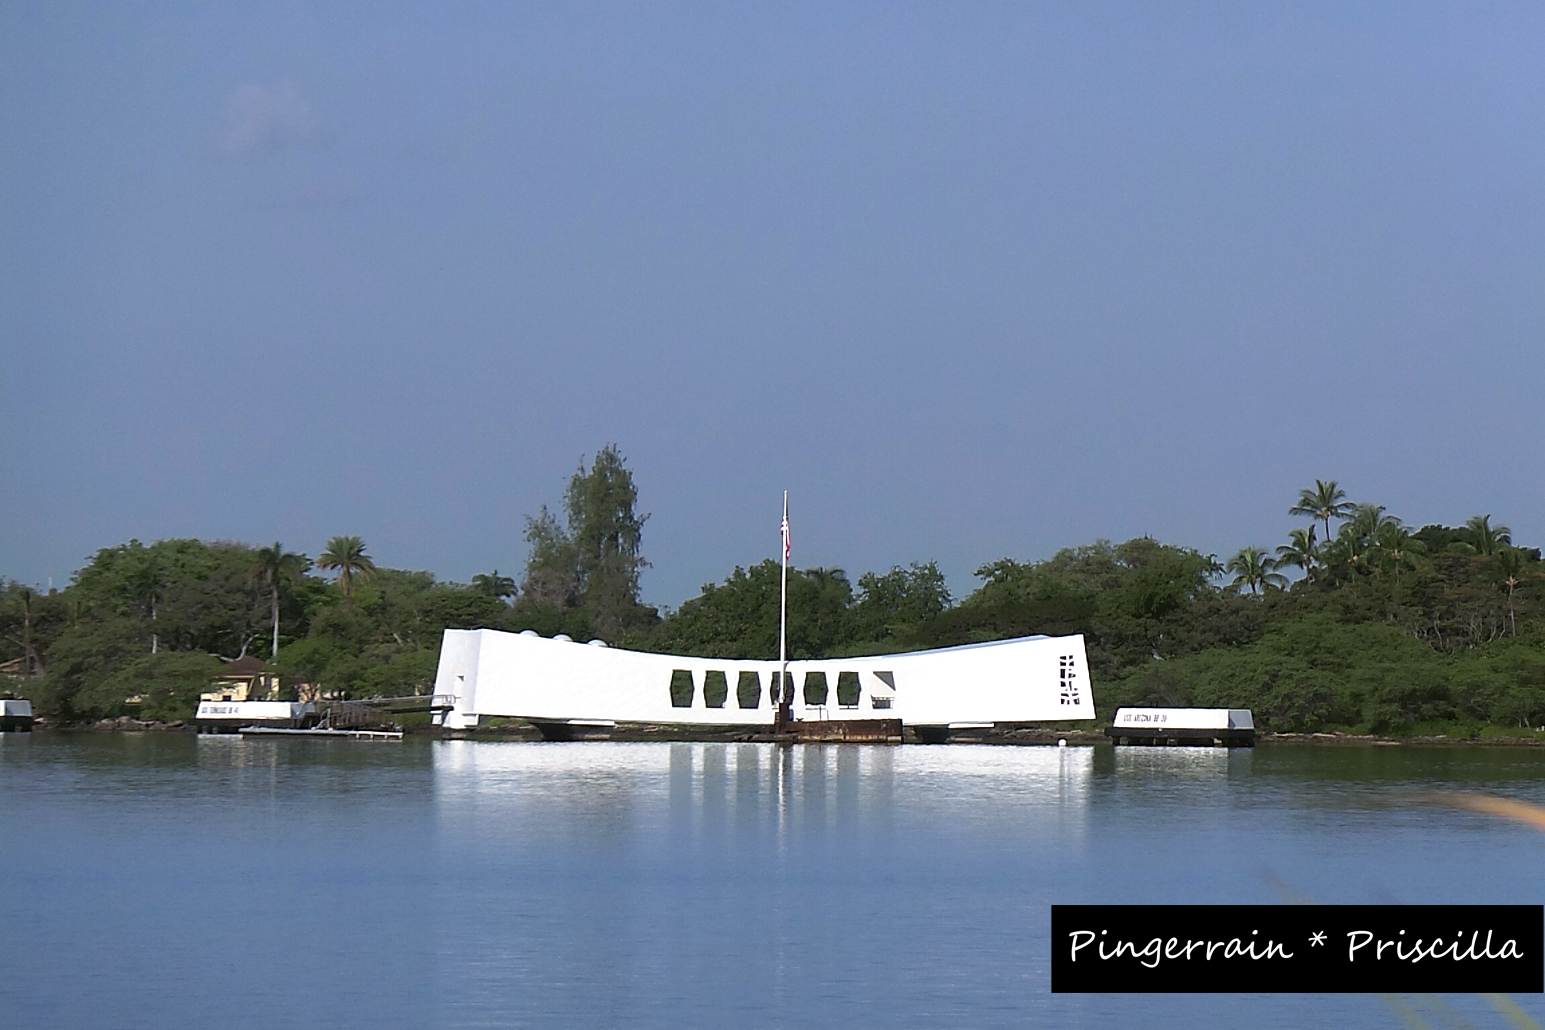 Pearl Harbour National Park & USS Arizona Memorial: War History in Perspective